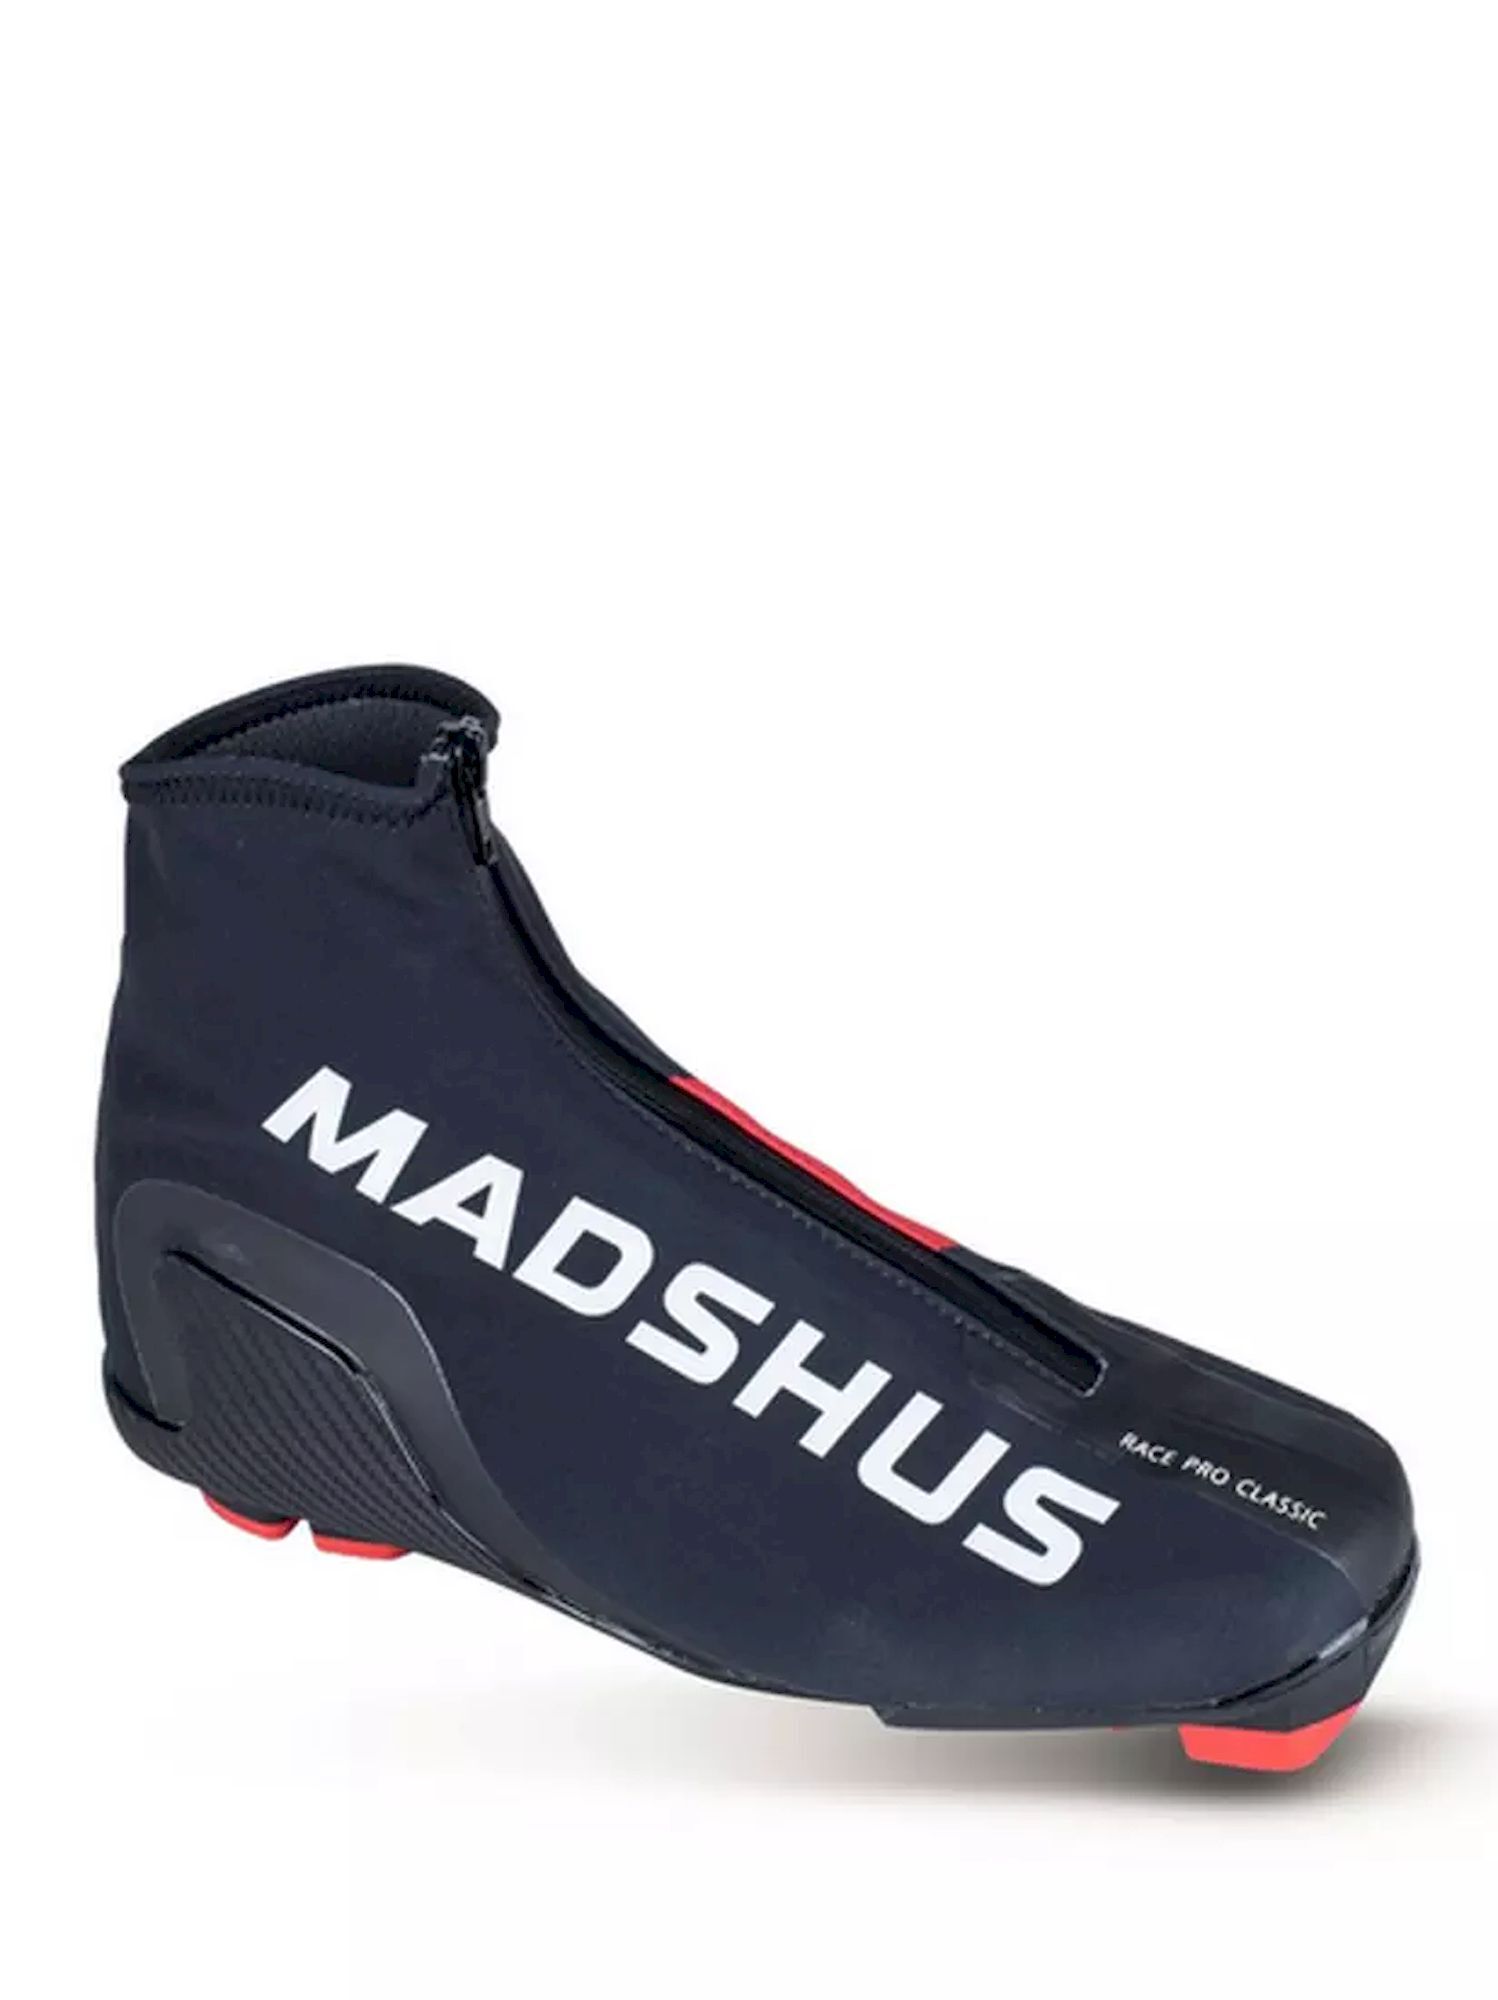 Madshus Race Pro Classic - Cross-country ski boots | Hardloop